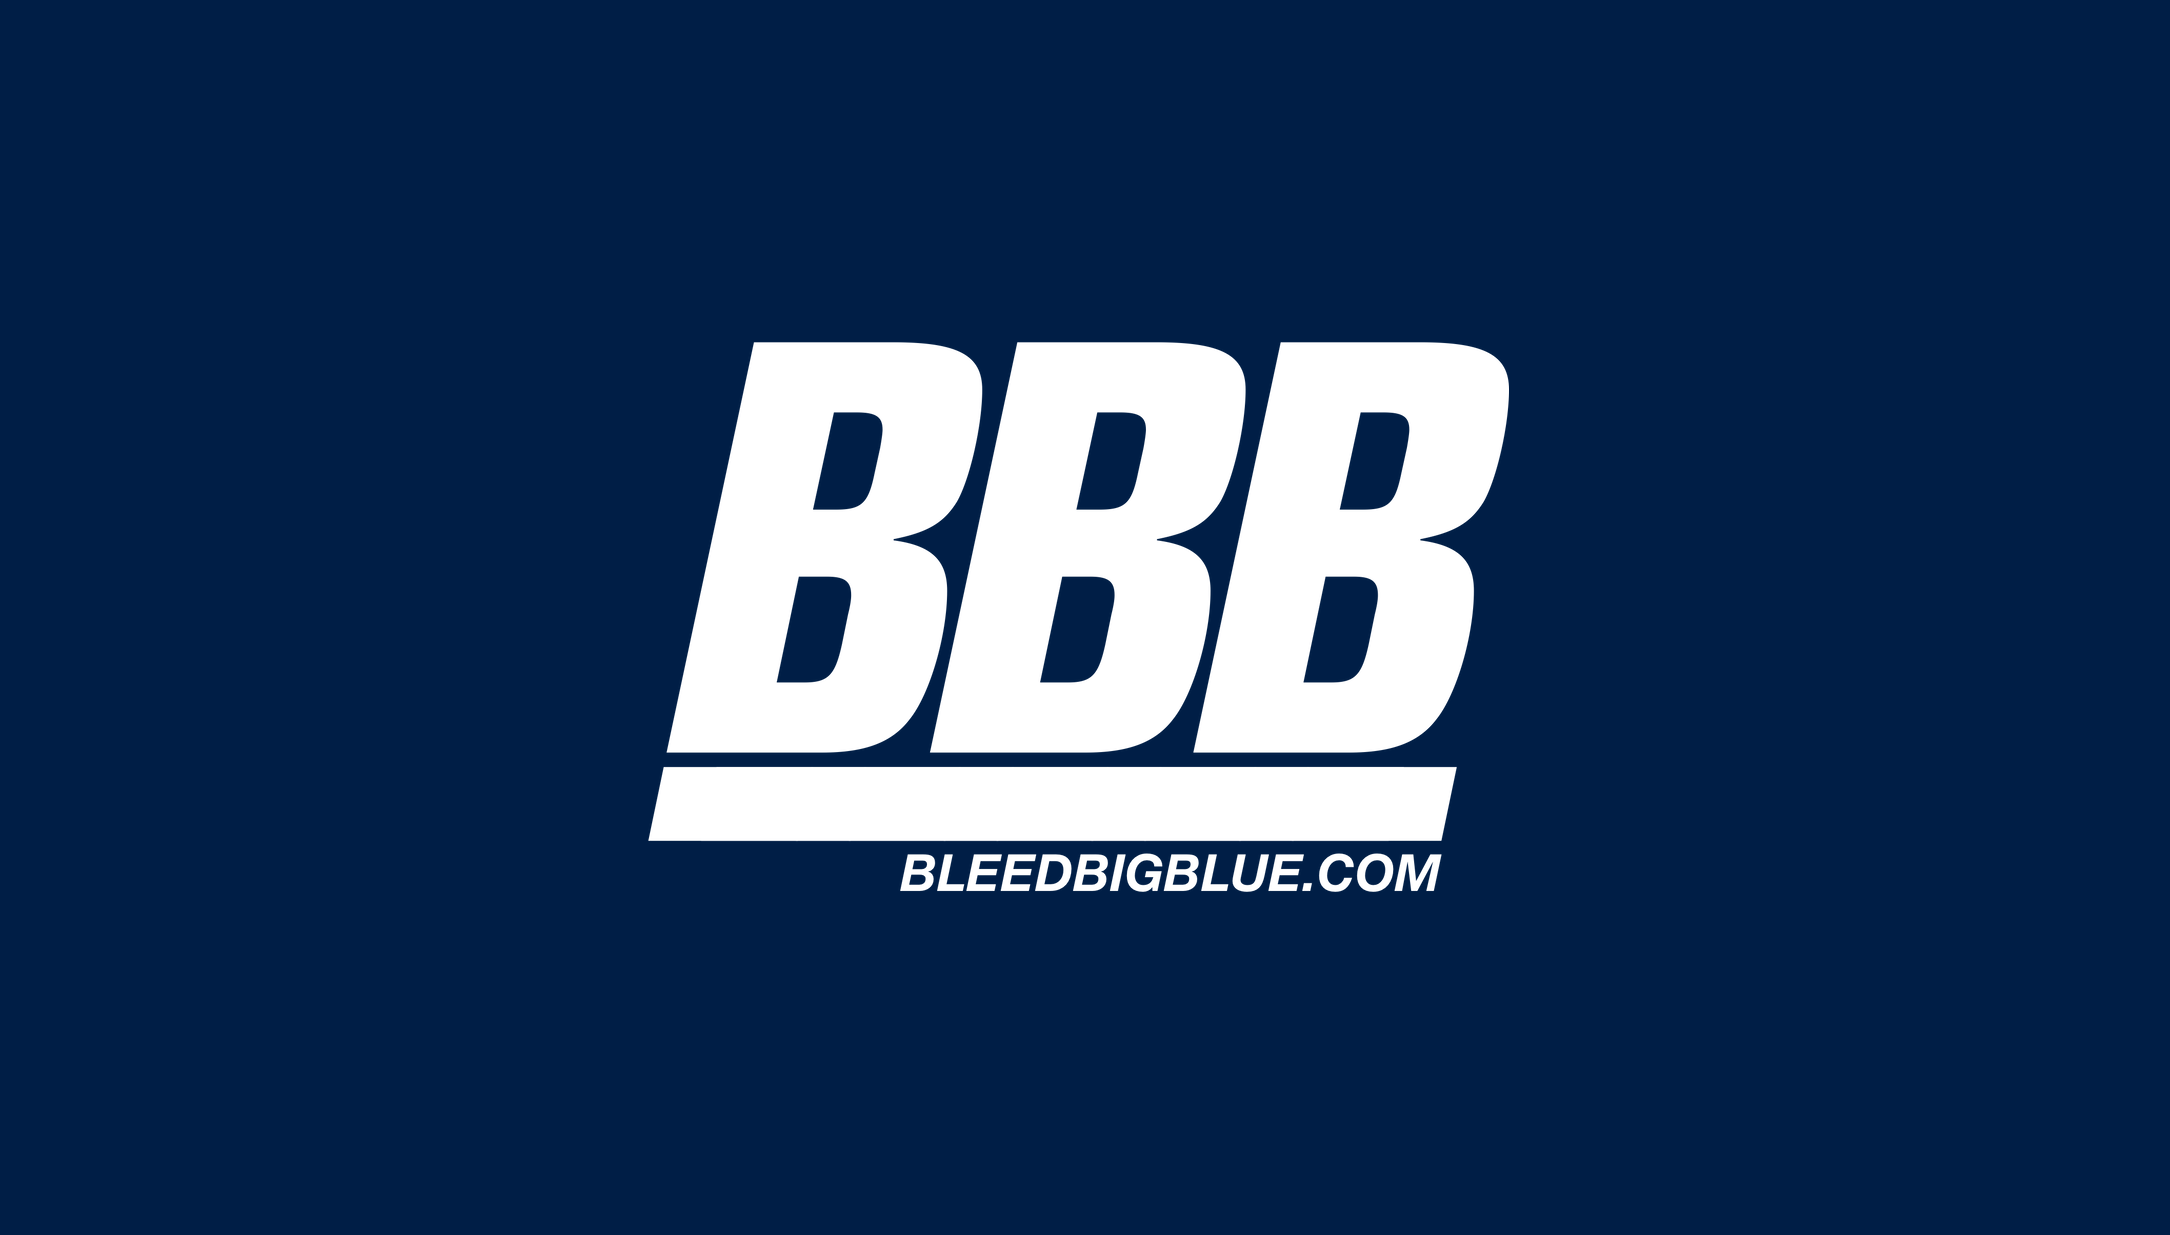 New York Giants Red Jerseys In 2016? - Bleedbigblue.com